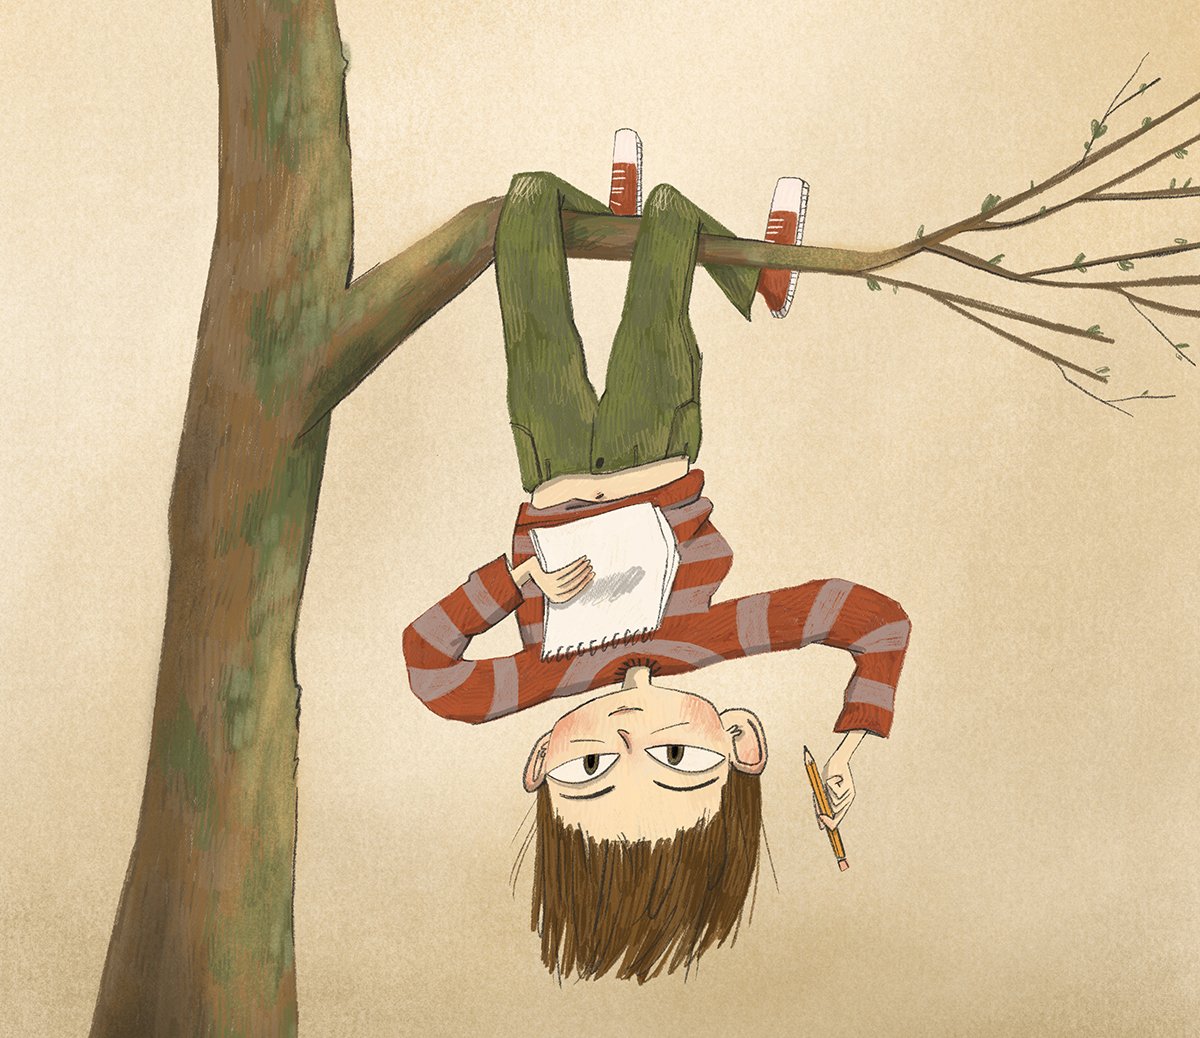 kitty-harris-hanging-from-tree-branch-illustration.jpg